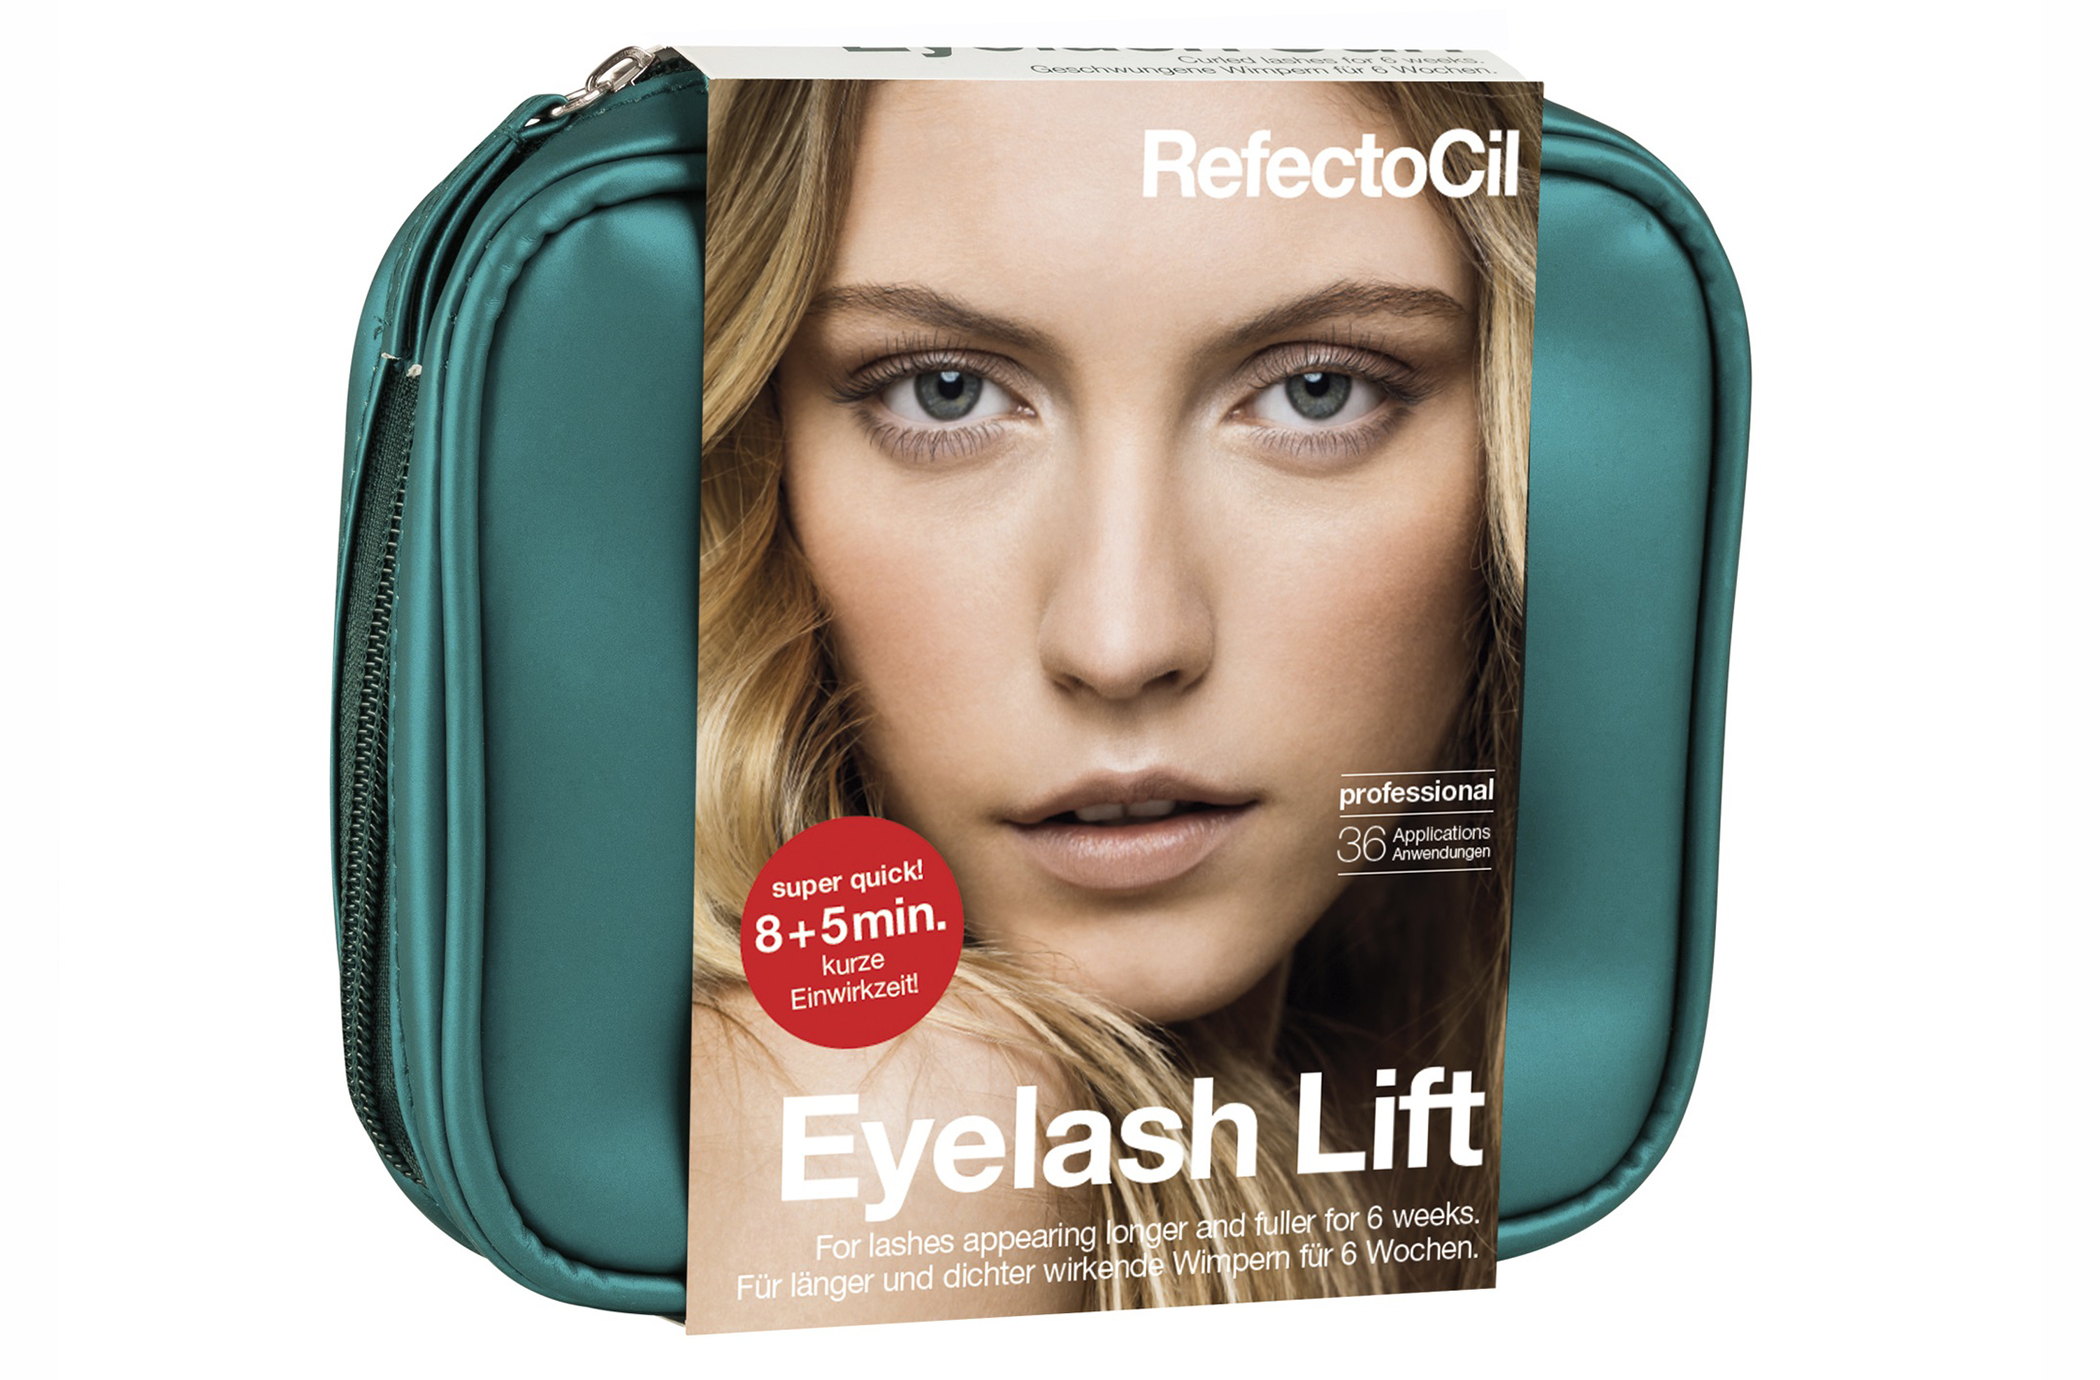 RefectoCil Eyelash Lift Kit.